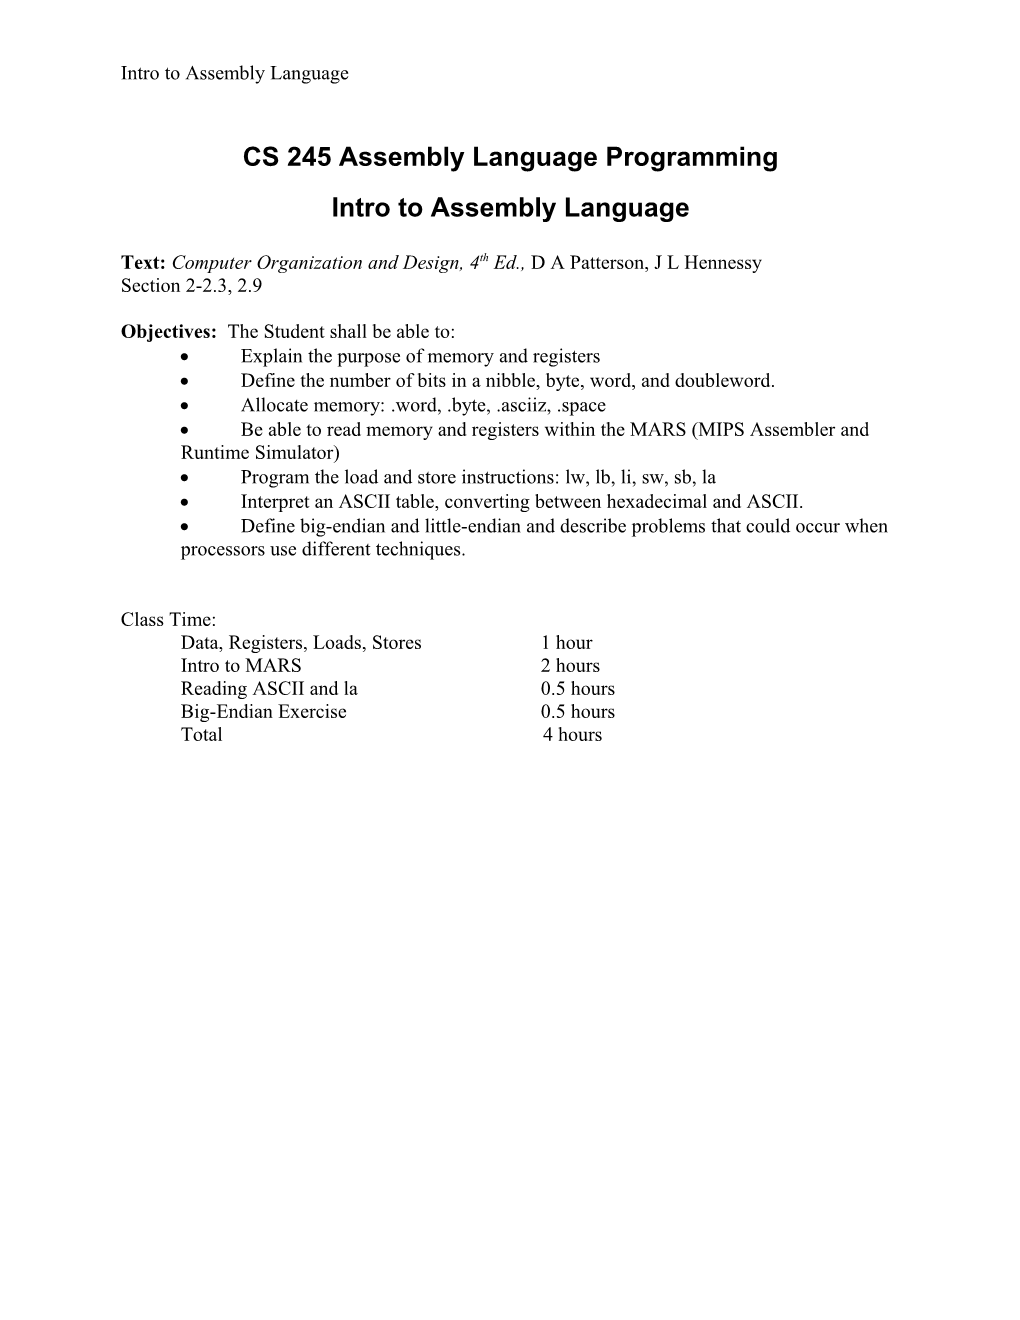 CS 245 Assembly Language Programming